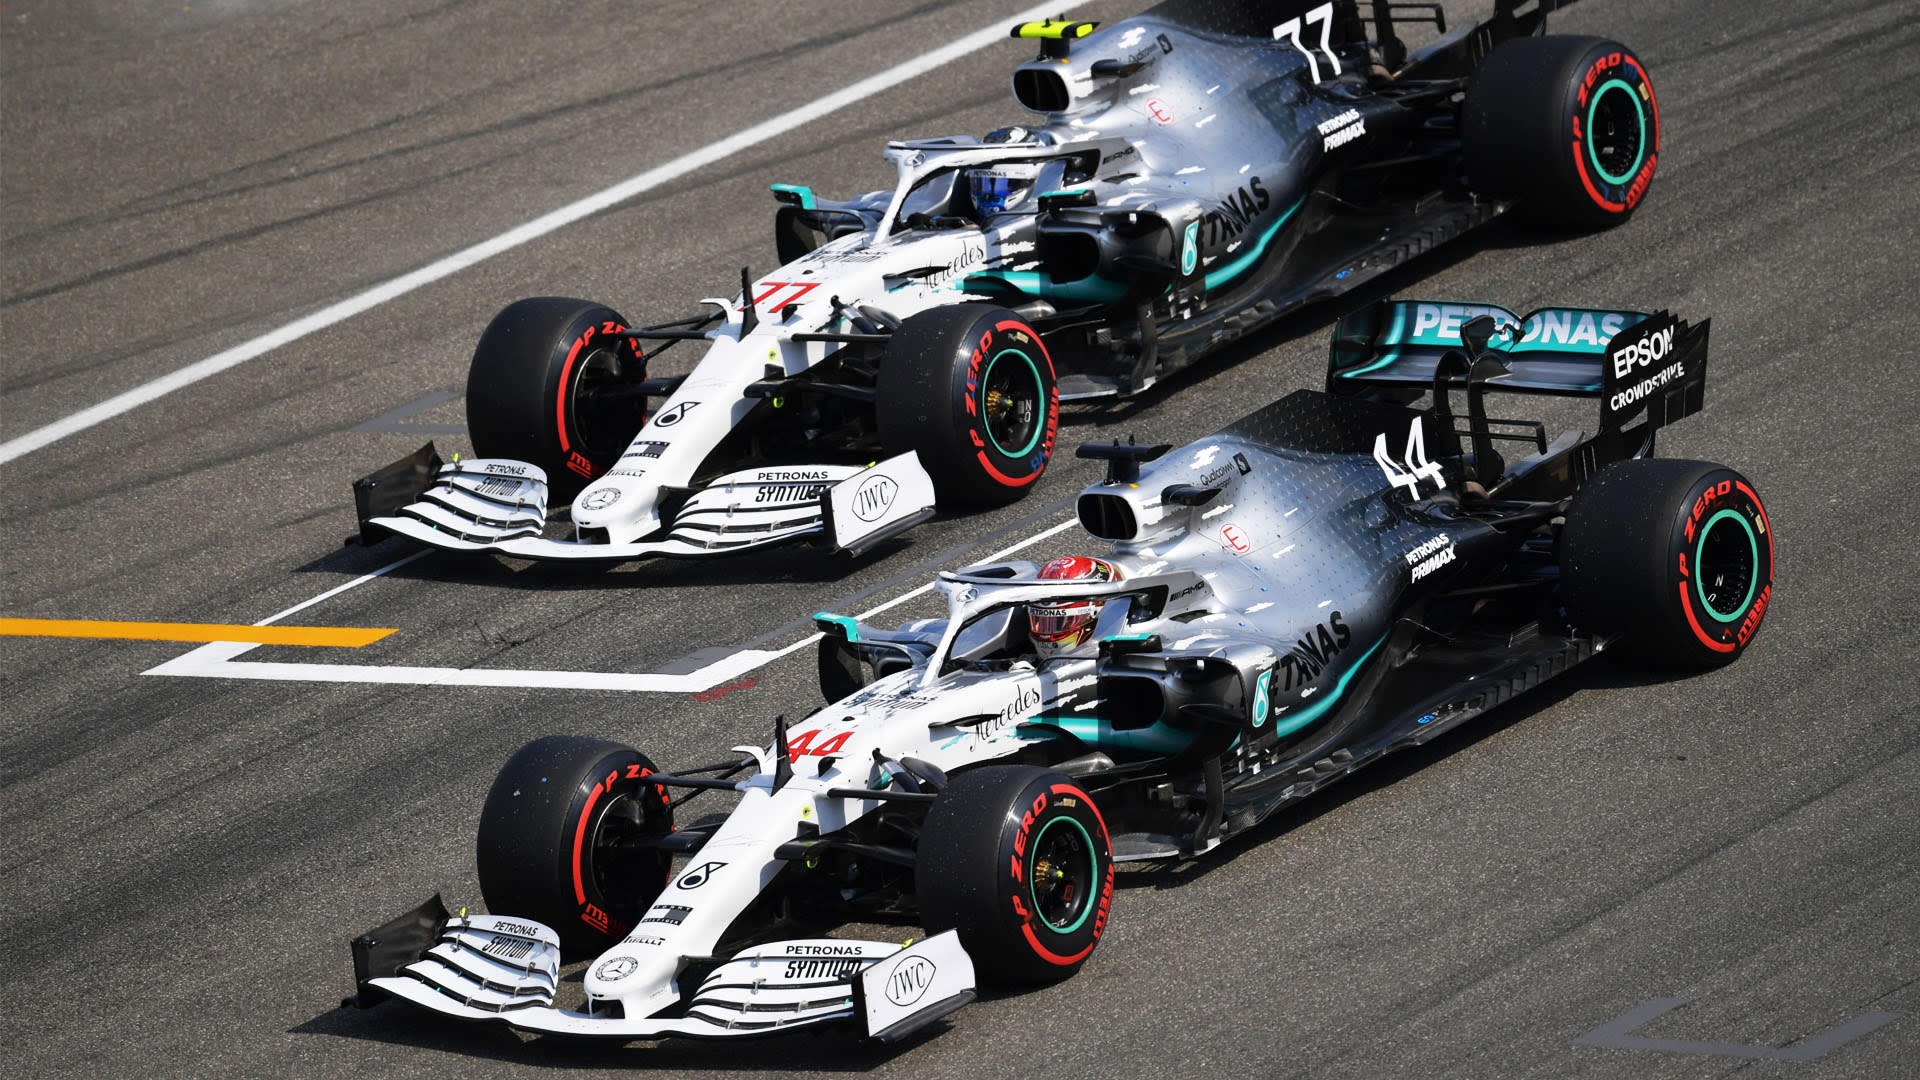 TECH TUESDAY Analysing Mercedes major 2019 German Grand Prix upgrade